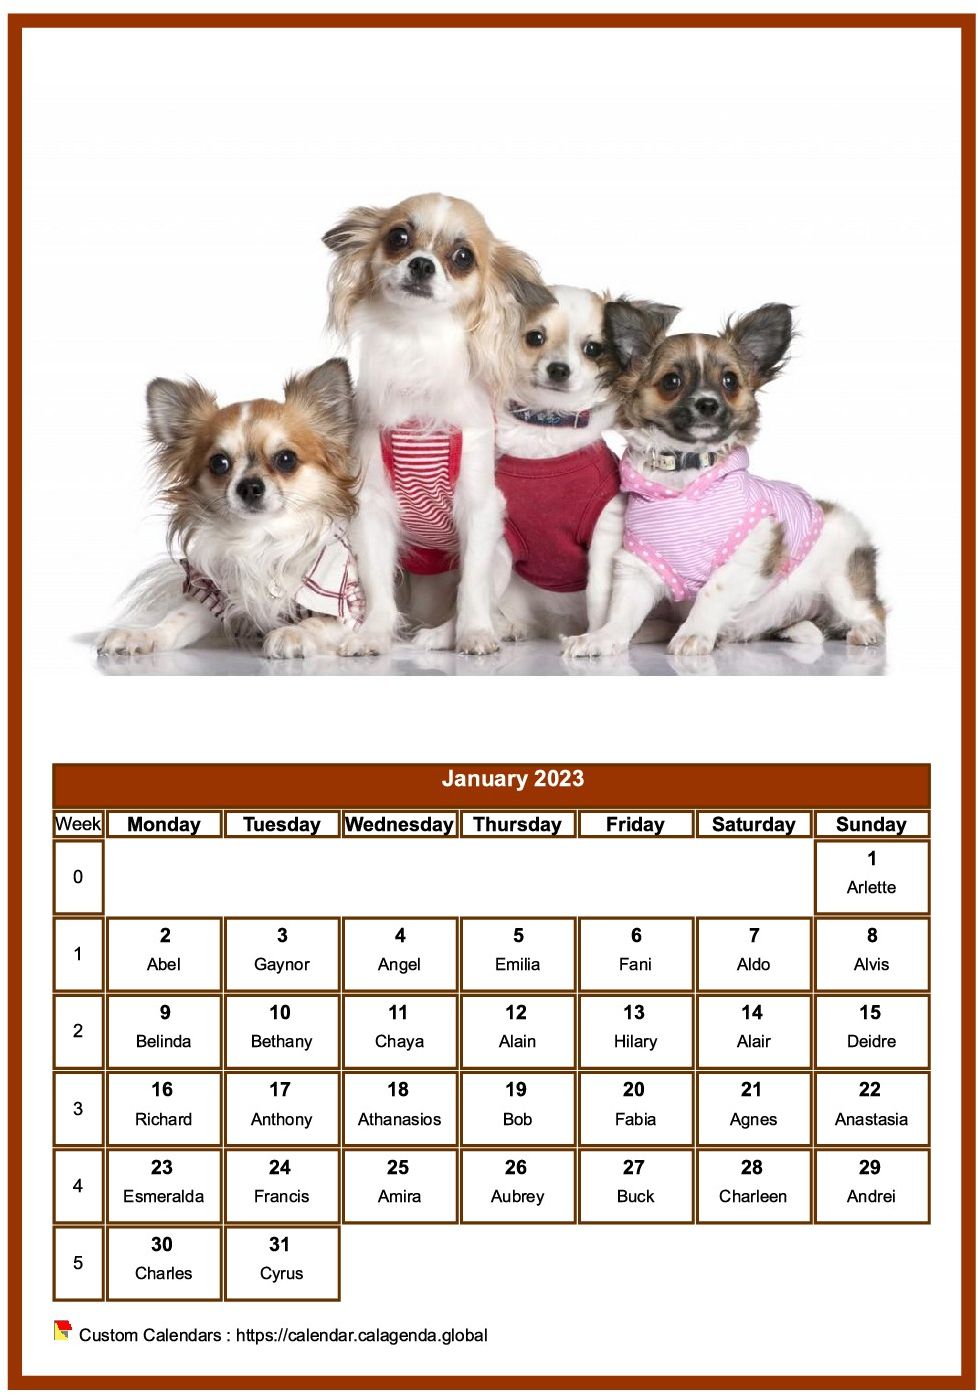 Calendar January 2023 dogs